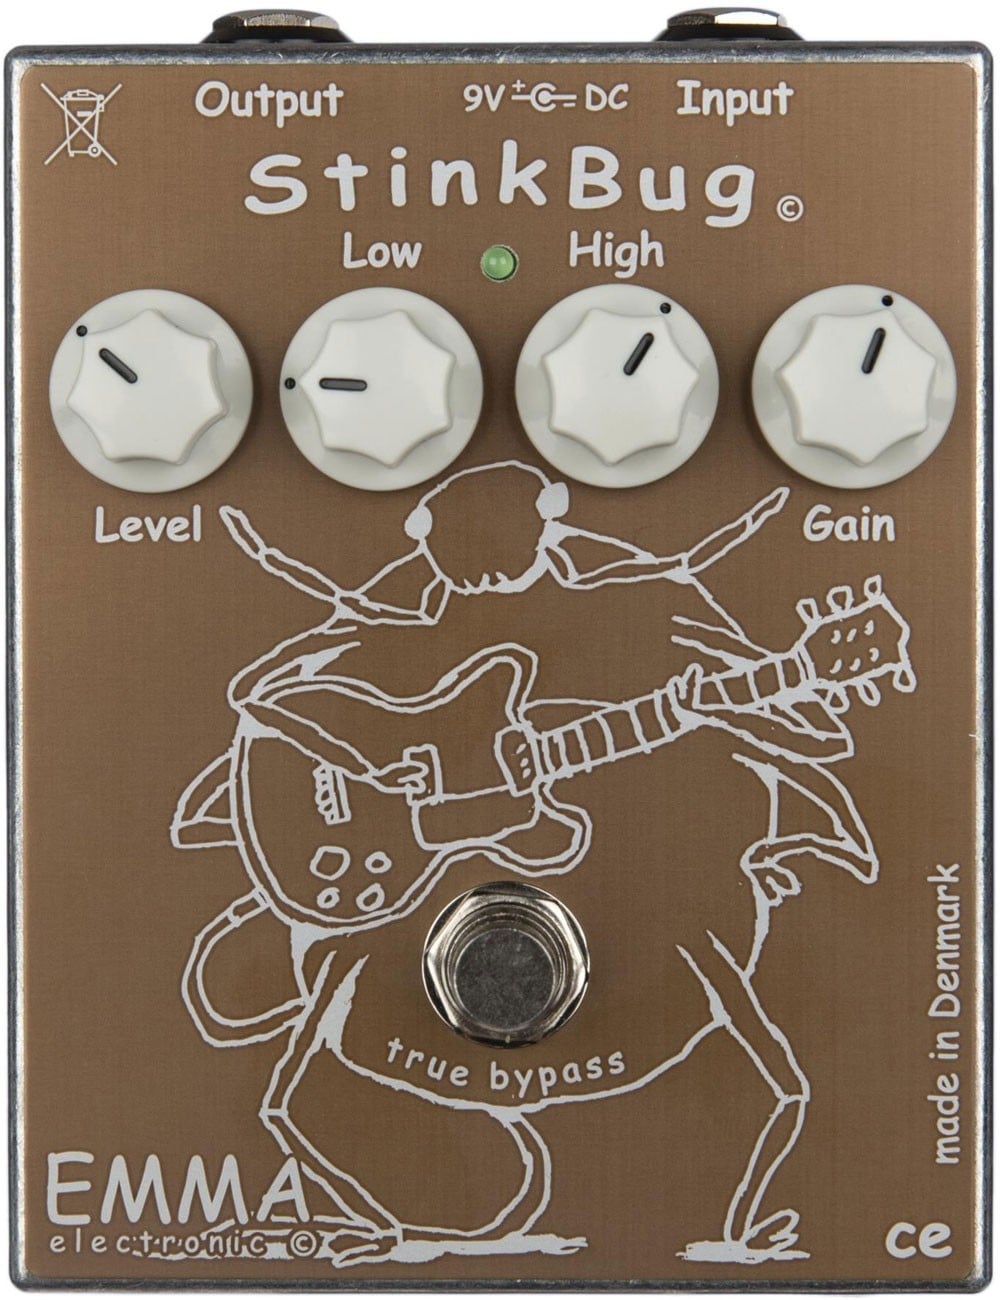 img src="/pedal" alt="emma electronics StinkBug Pedal"